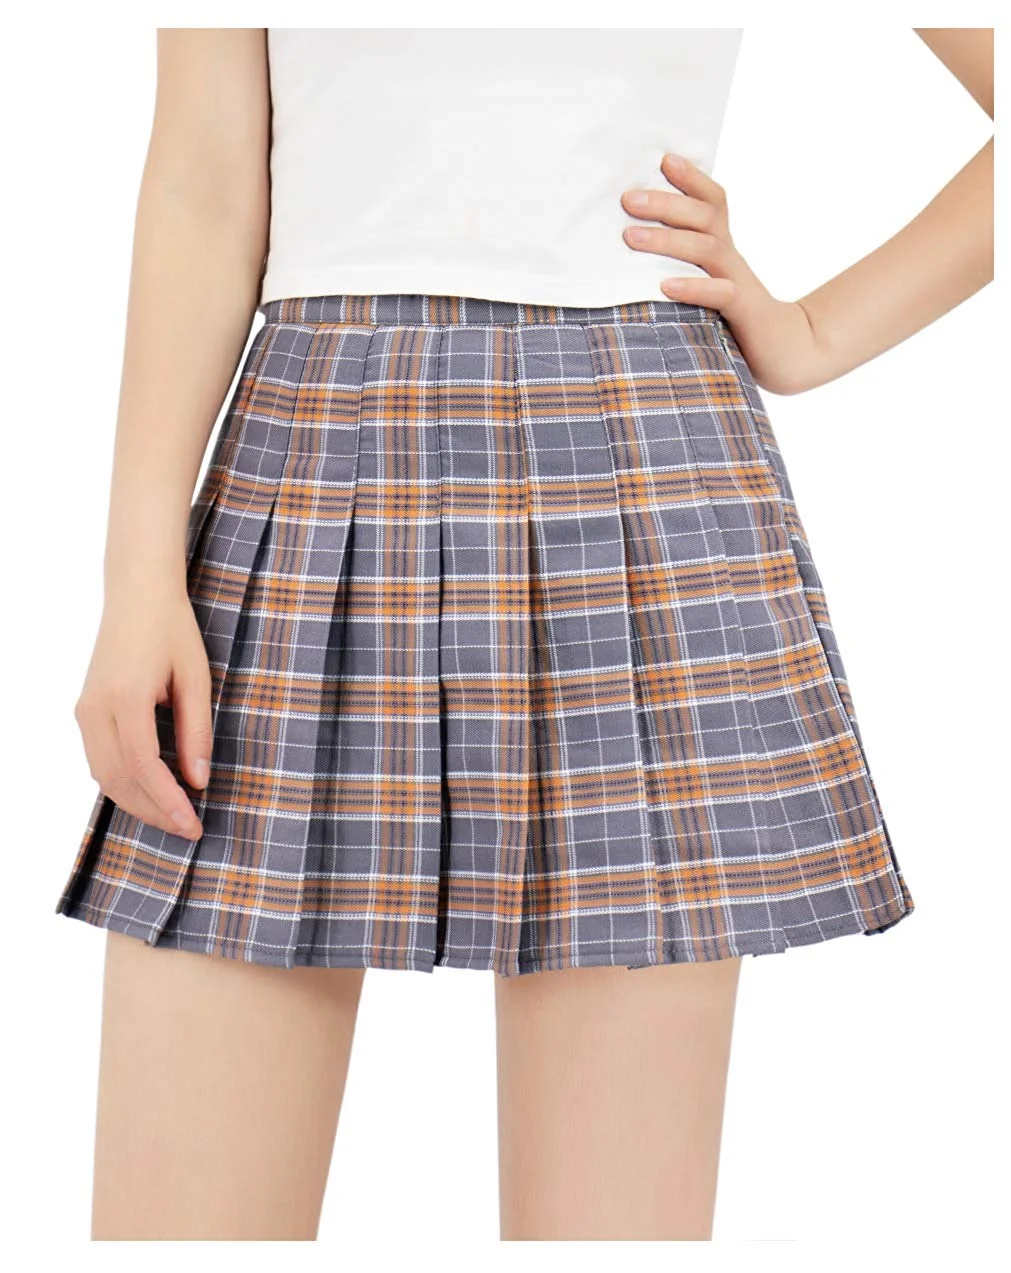 Plaid Skirt High Waist Japan School Girl Uniform Skirts   US Size